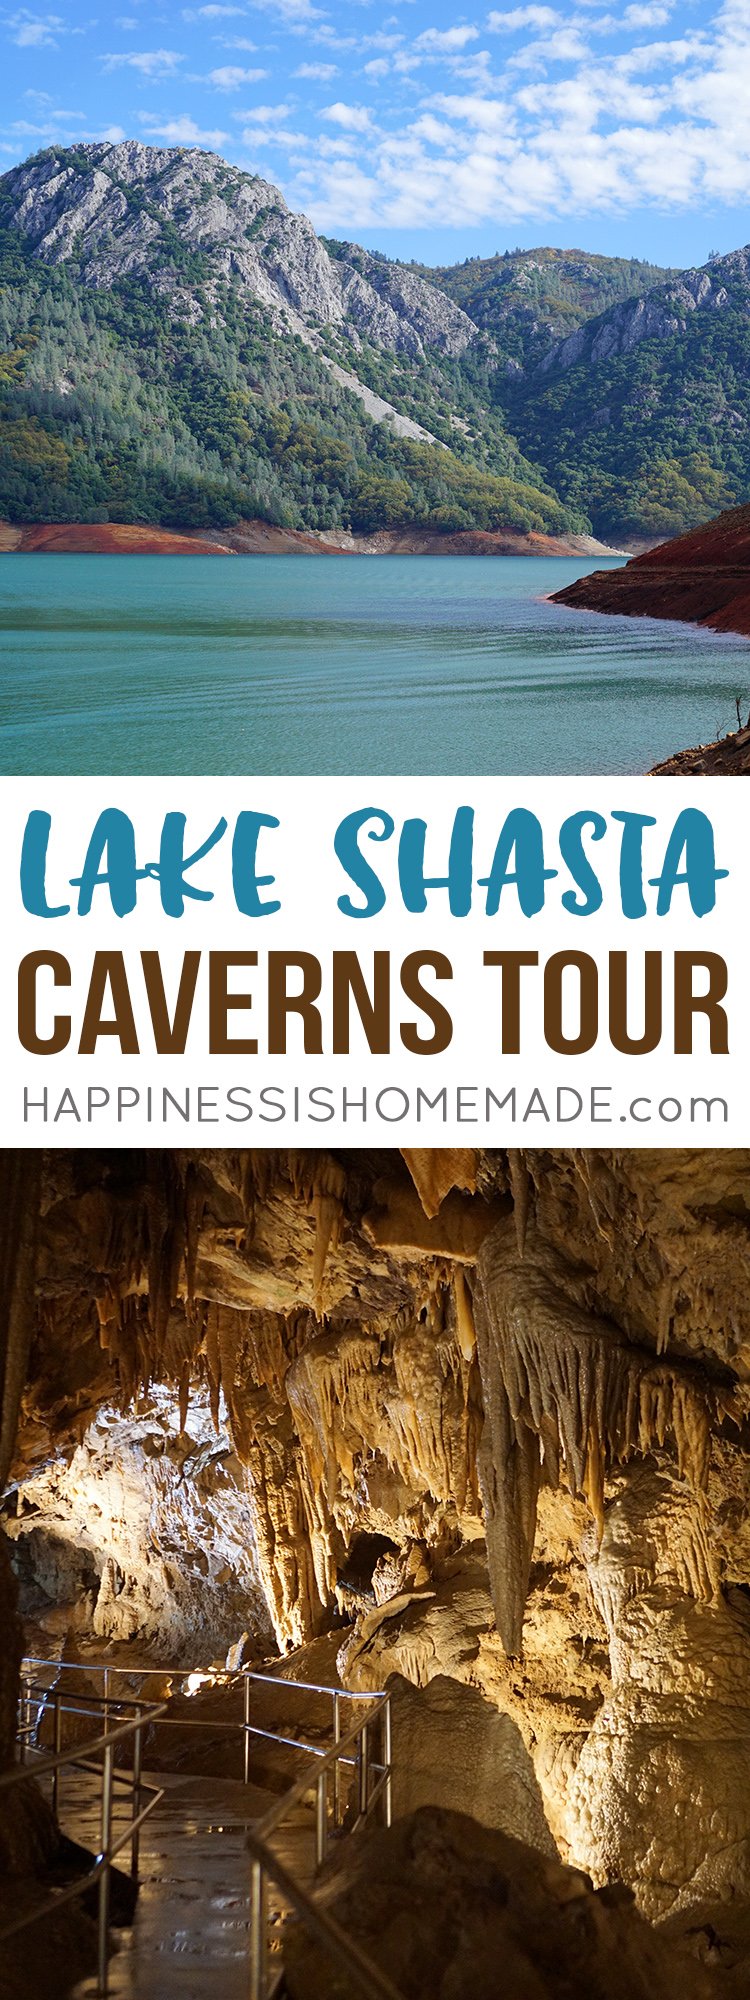 lake shasta caverns tour